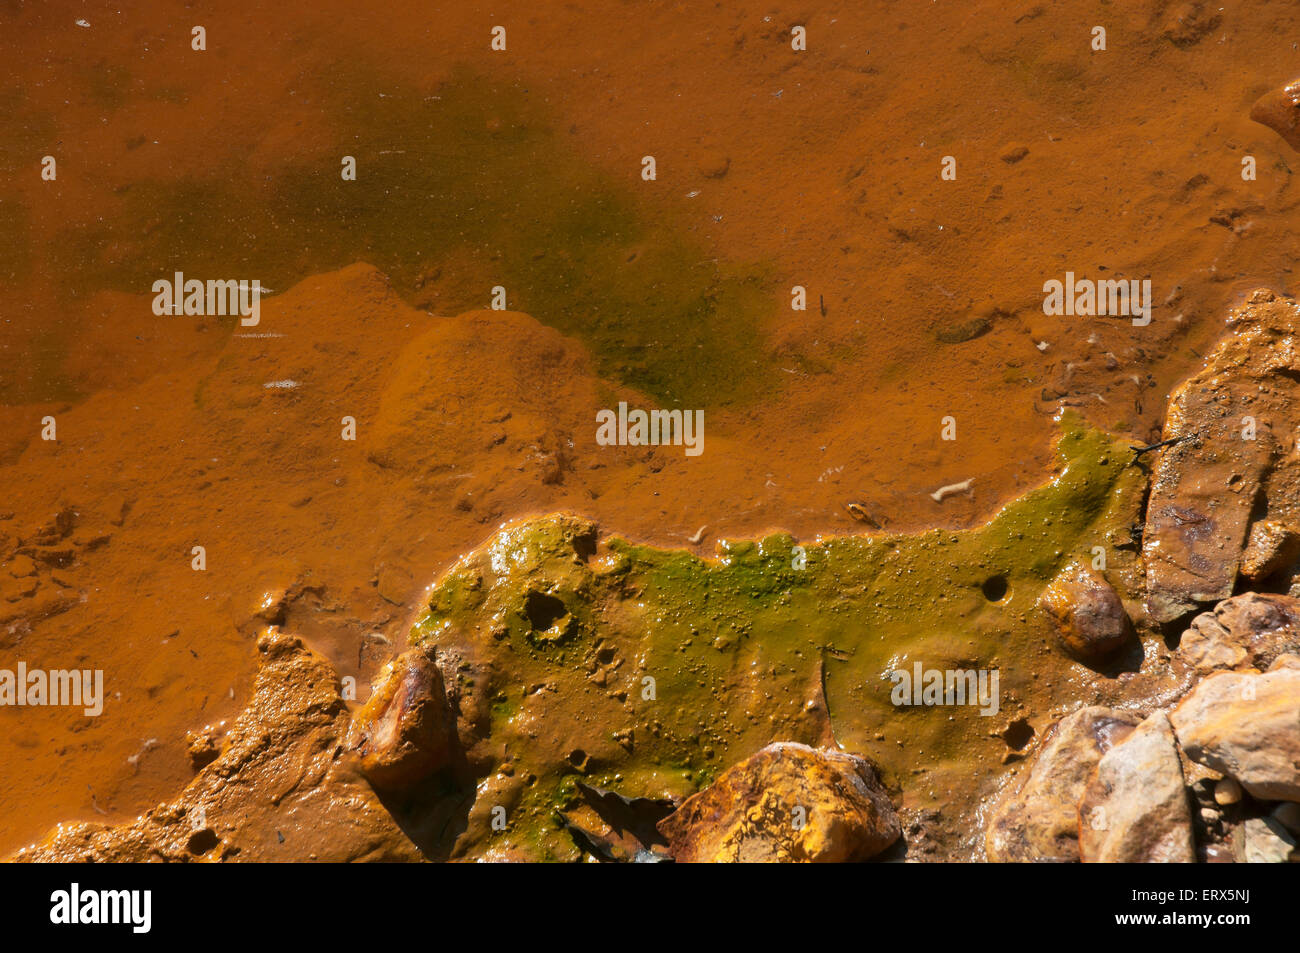 Rio Tinto-algae, Villarrasa, Huelva province, Region of Andalusia, Spain, Europe Stock Photo